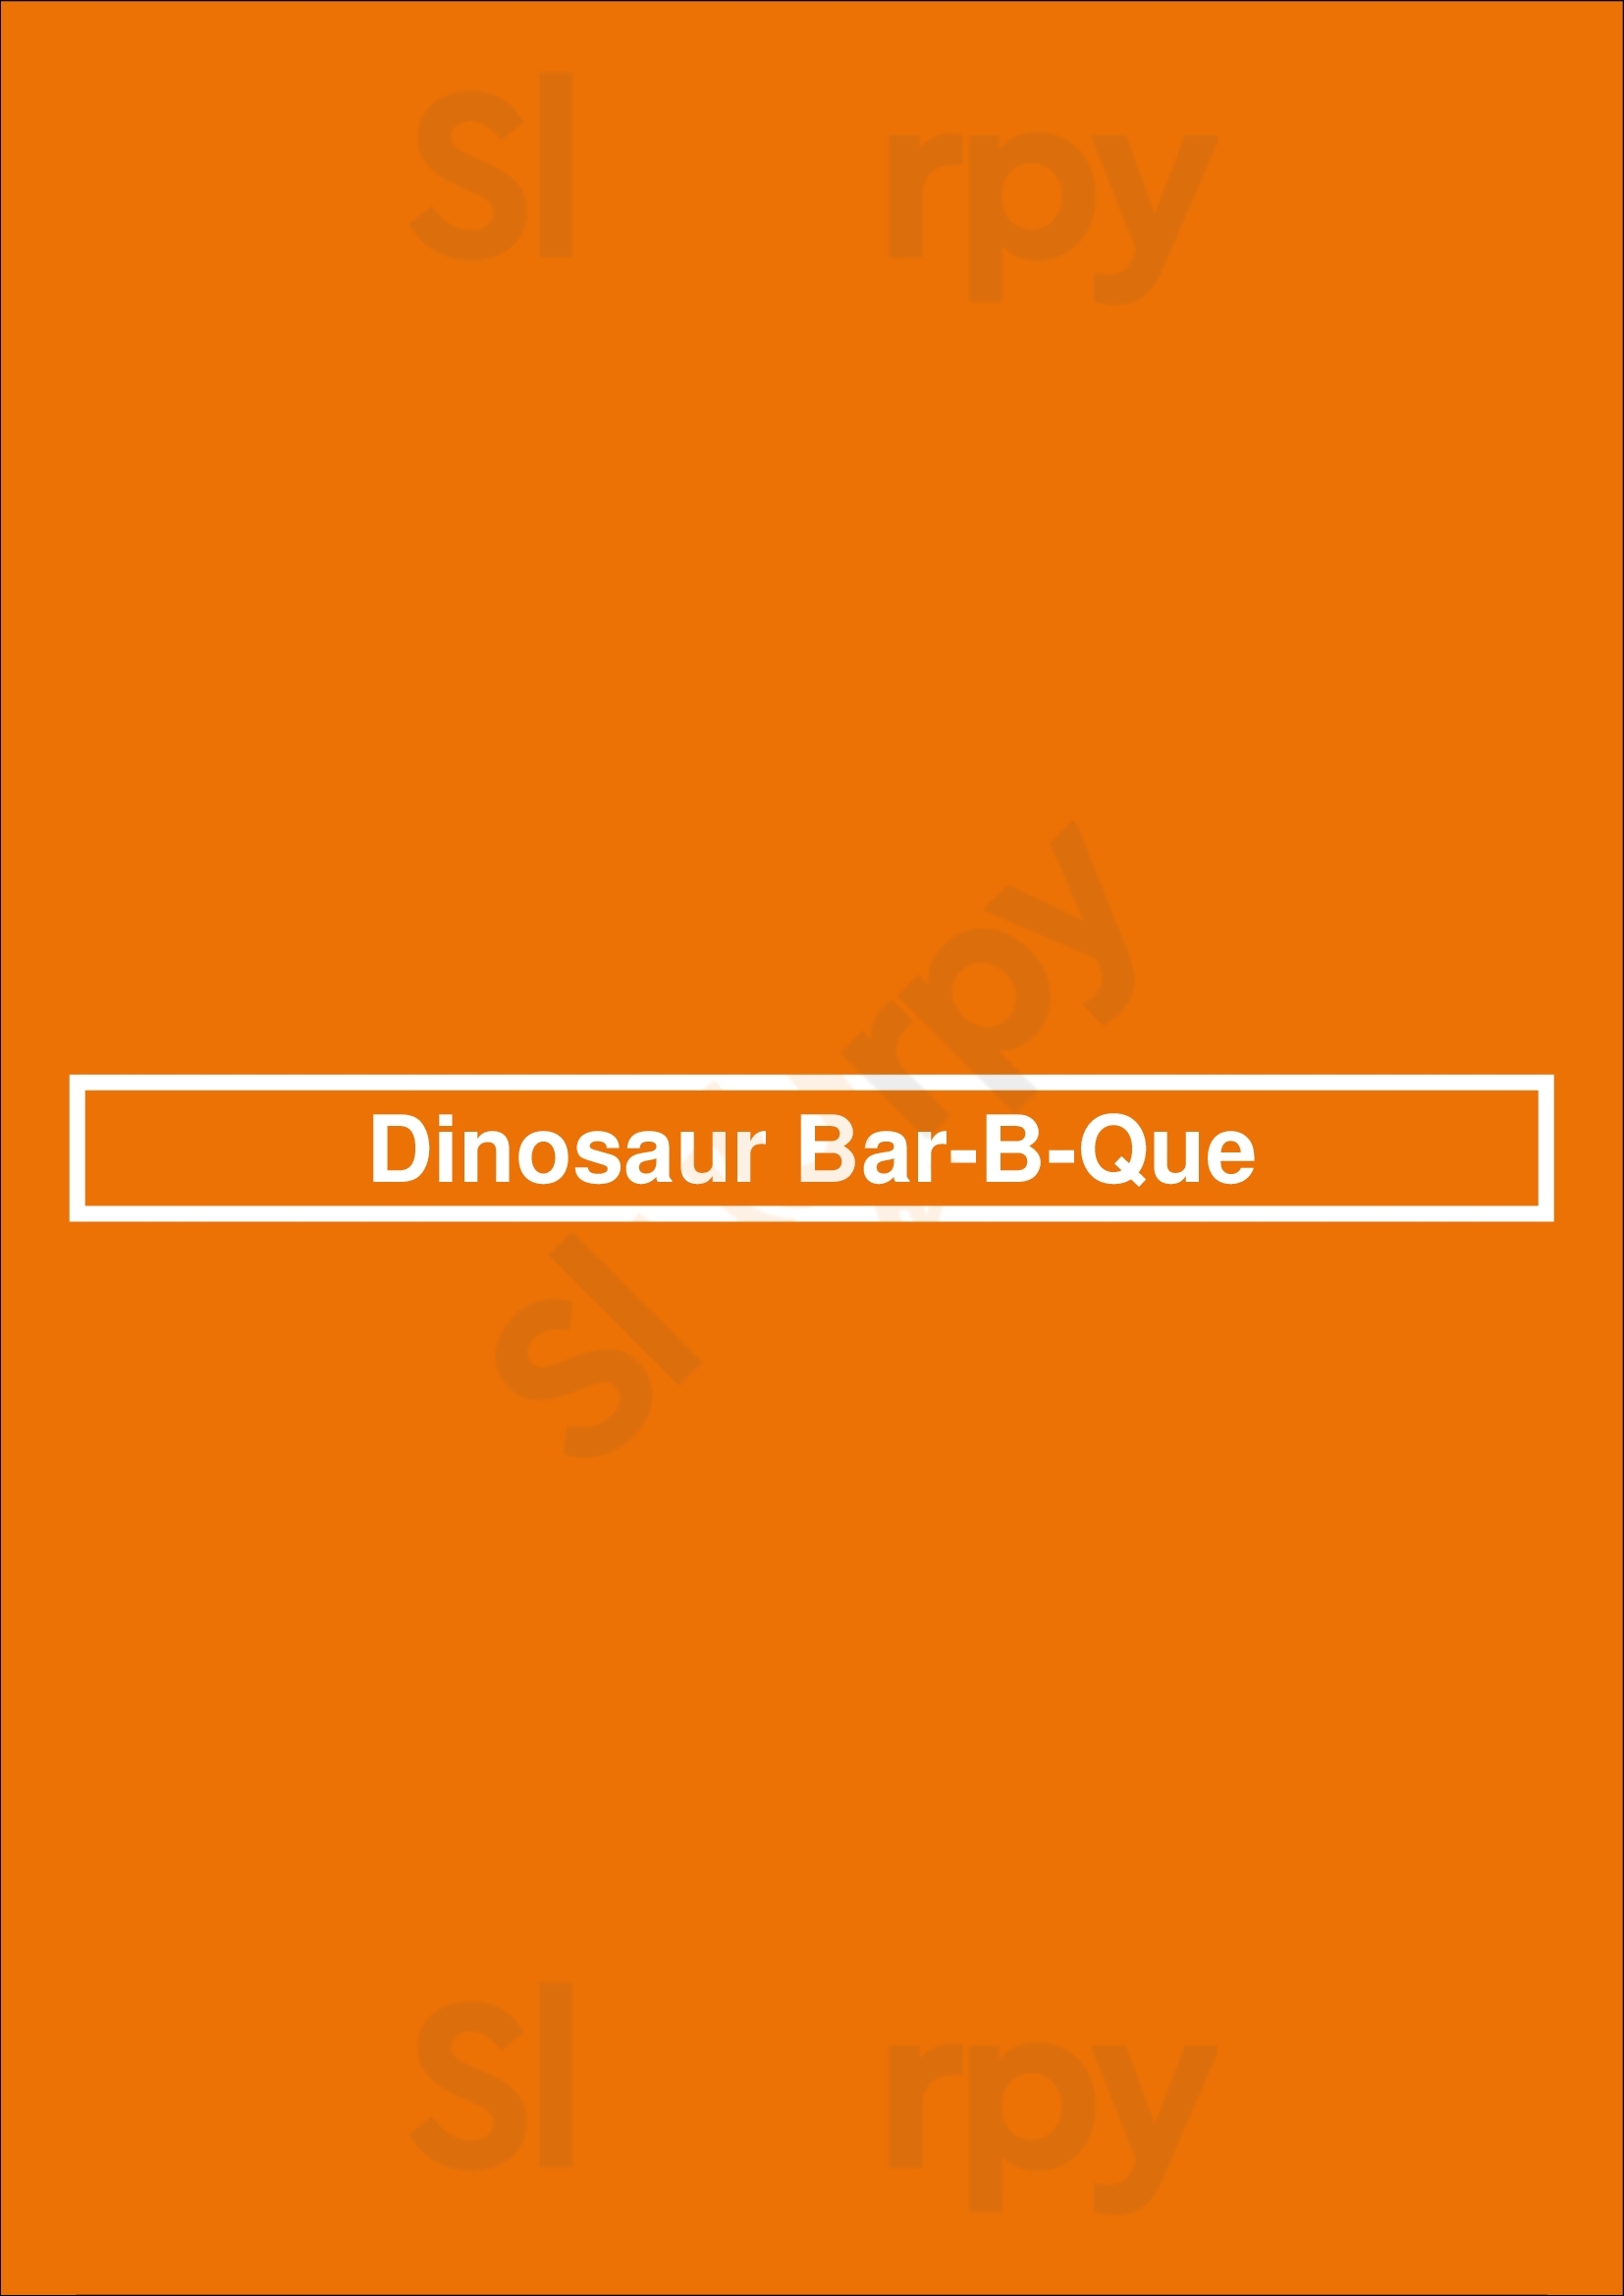 Dinosaur Bar-b-que Rochester Menu - 1